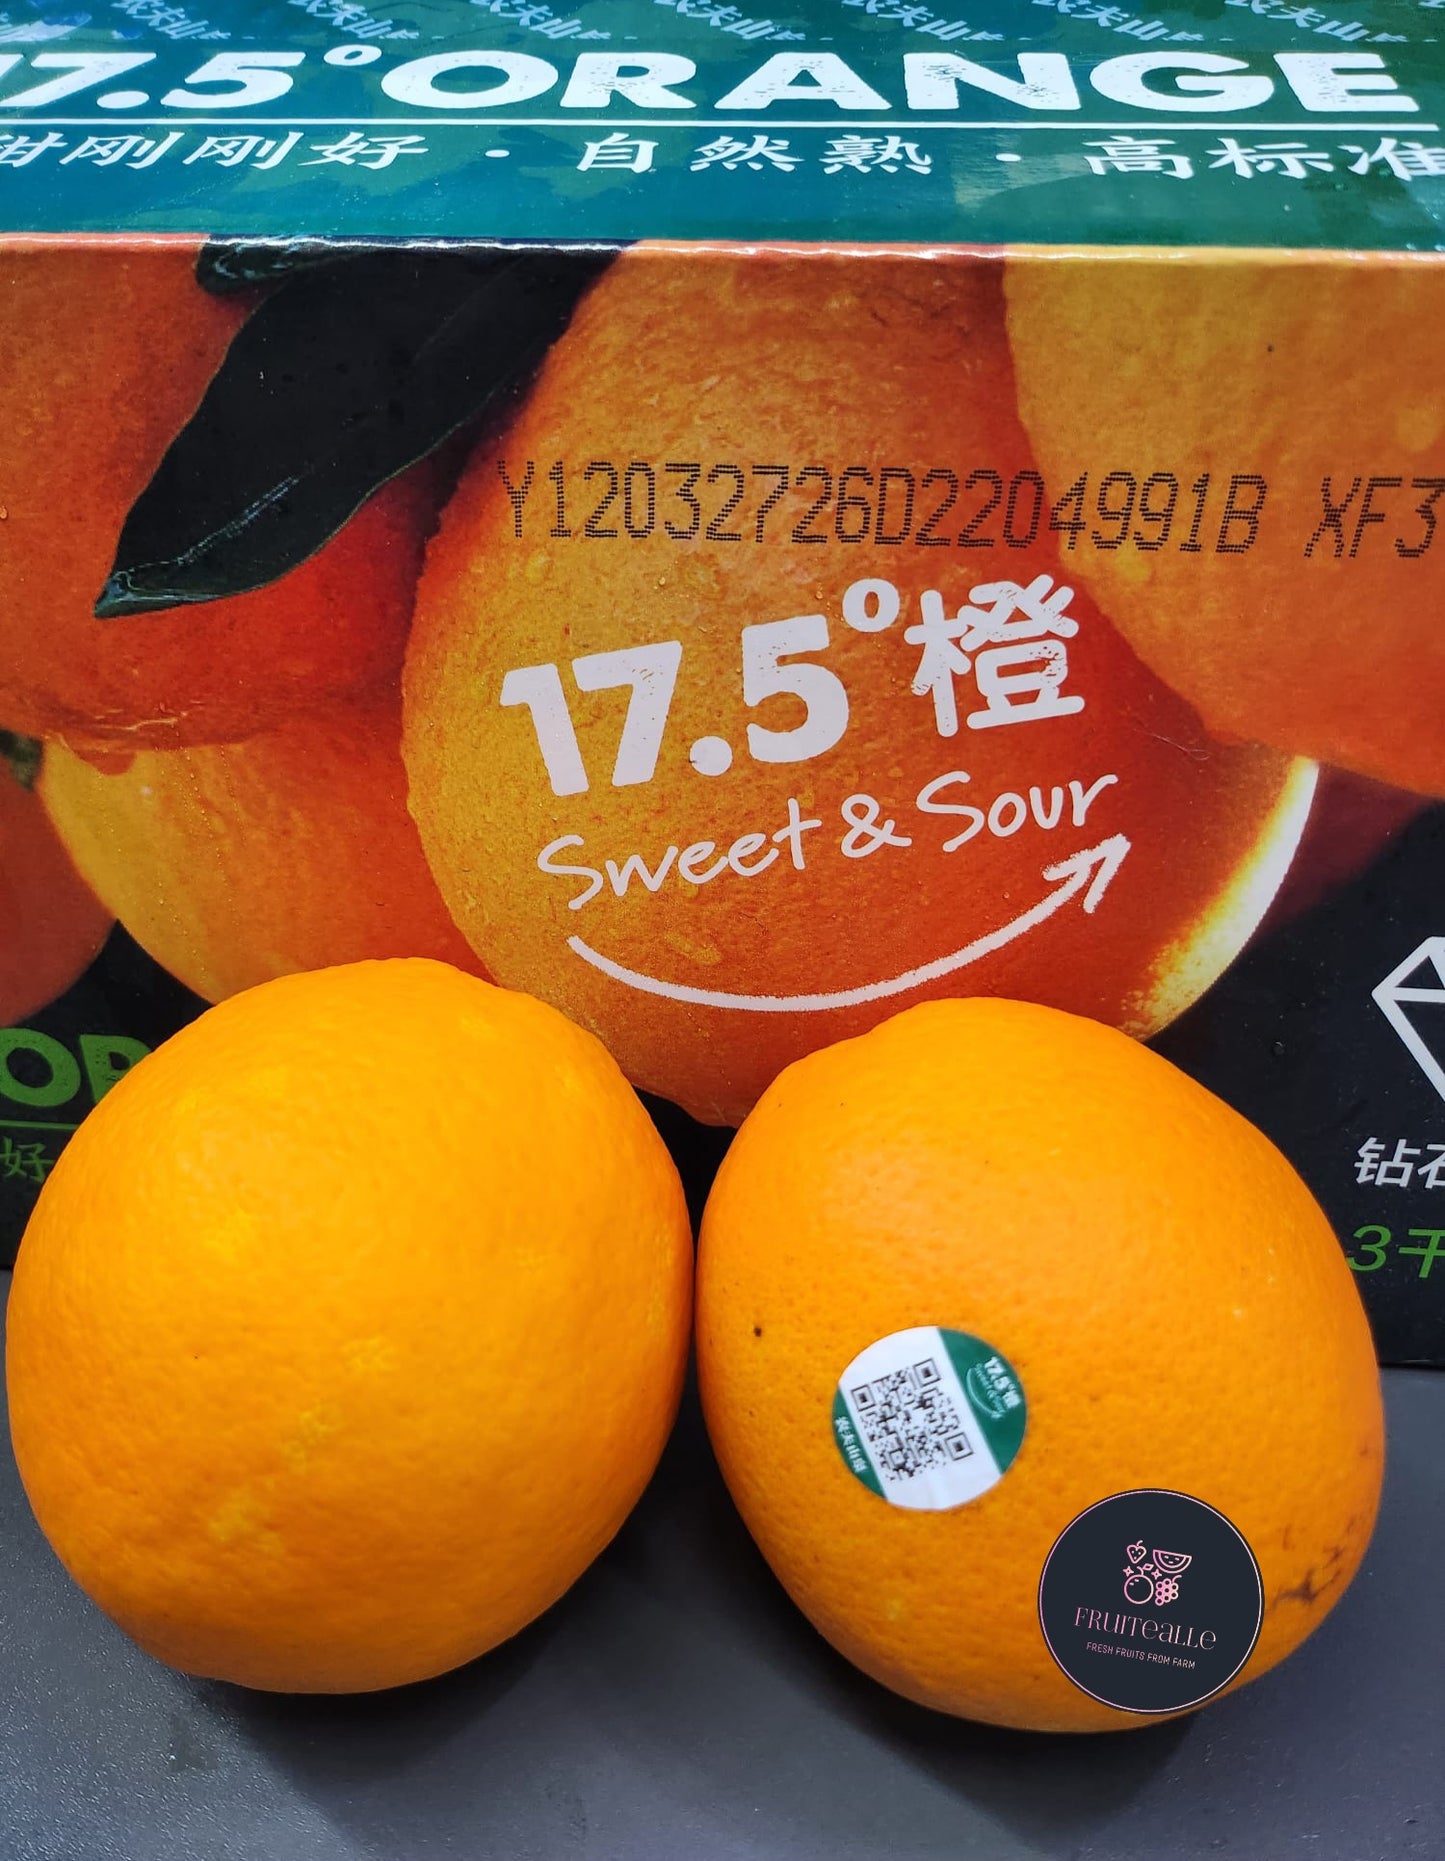 Oranges - Sweet 17.5° Spring Mountains Oranges 农夫山泉橙